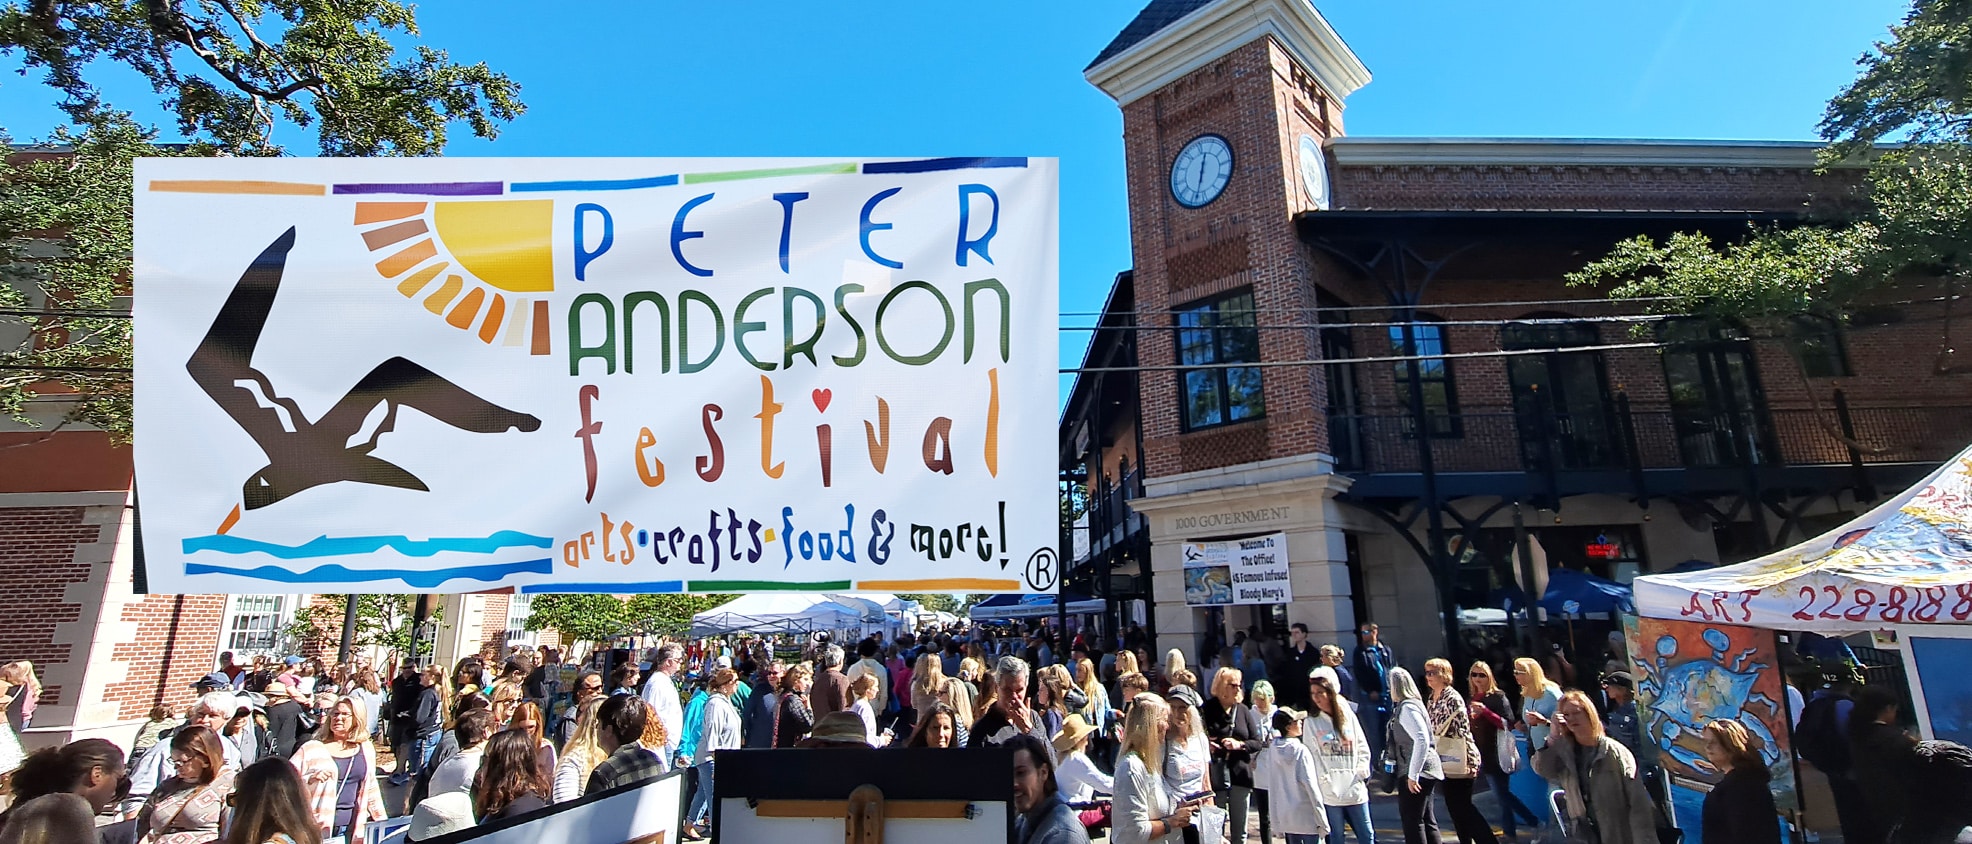 Peter Anderson Festival Returns to Ocean Springs November 56 Our